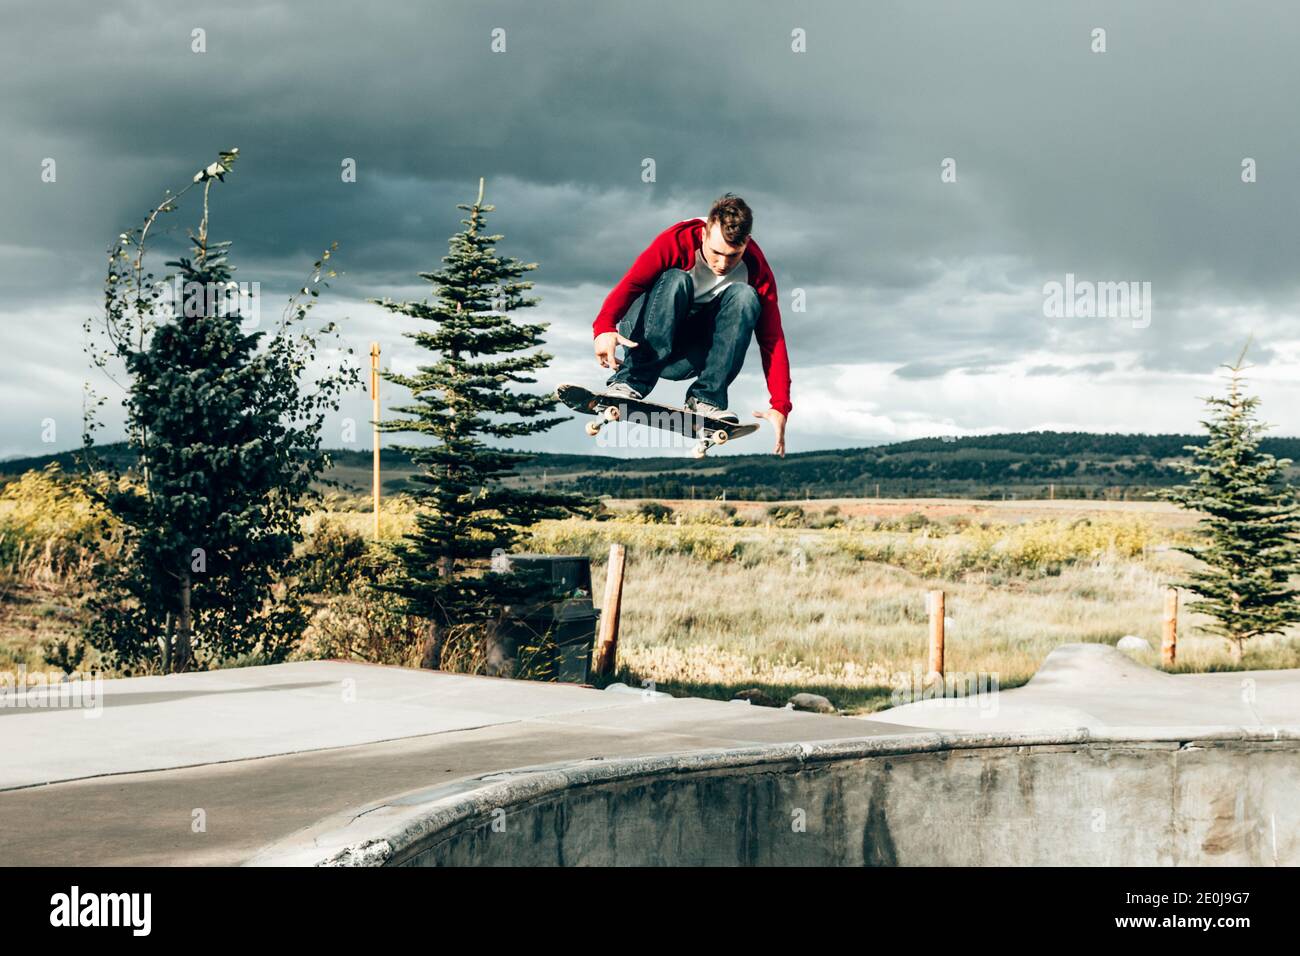 Male skateboarder flipping skateboard in the air at a skatepark Stock Photo